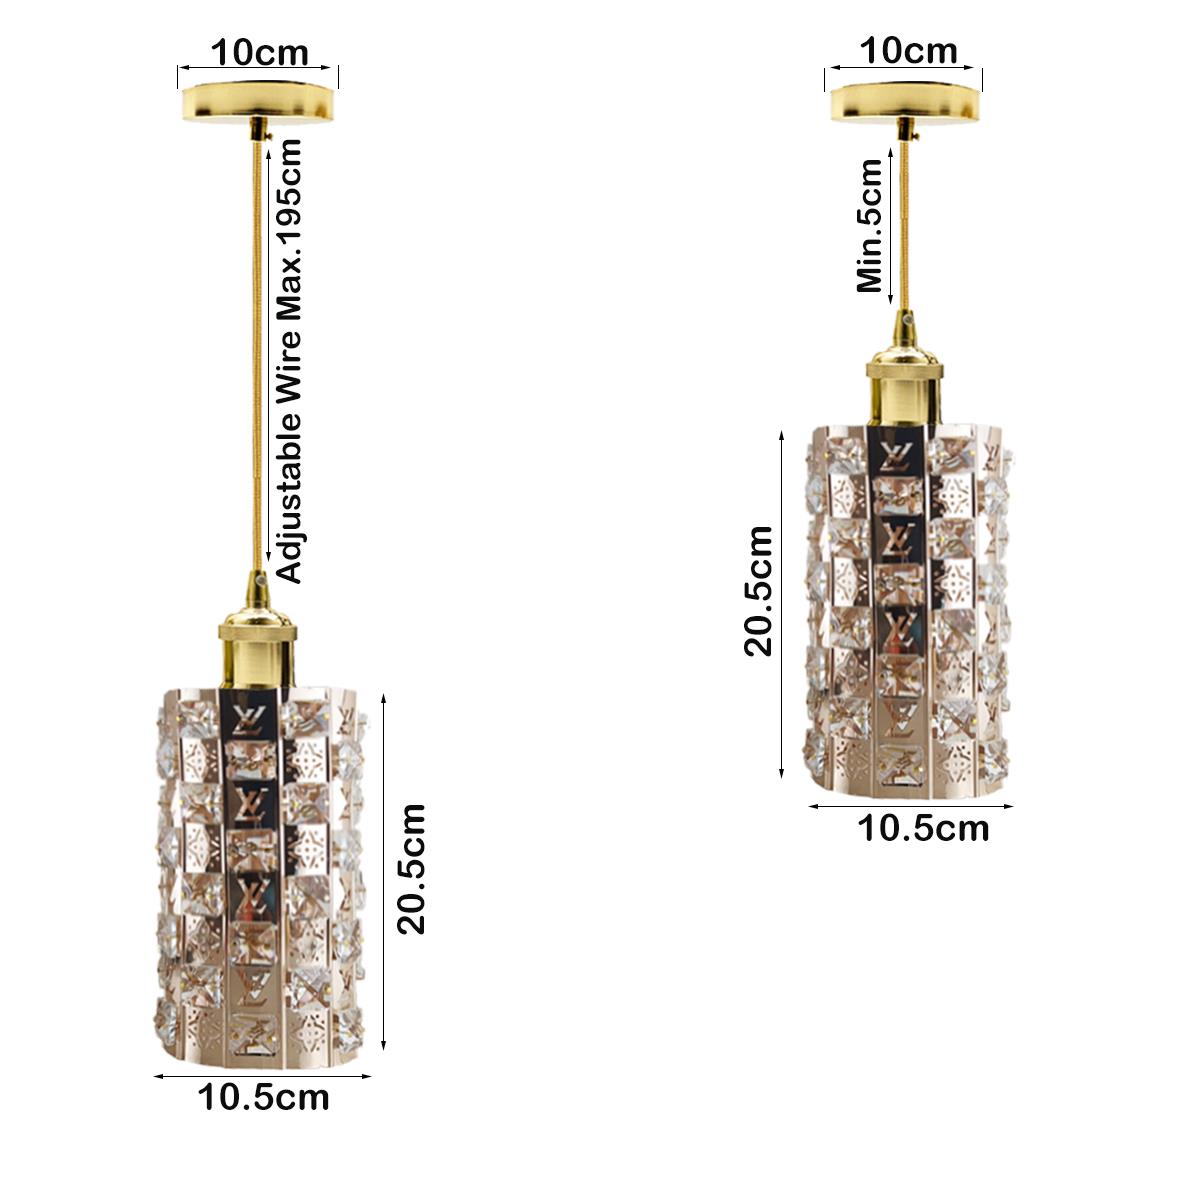 Modern Gold Ceiling Pendant Light Lamp Shade Crystal Droplet UK~1444 - LEDSone UK Ltd